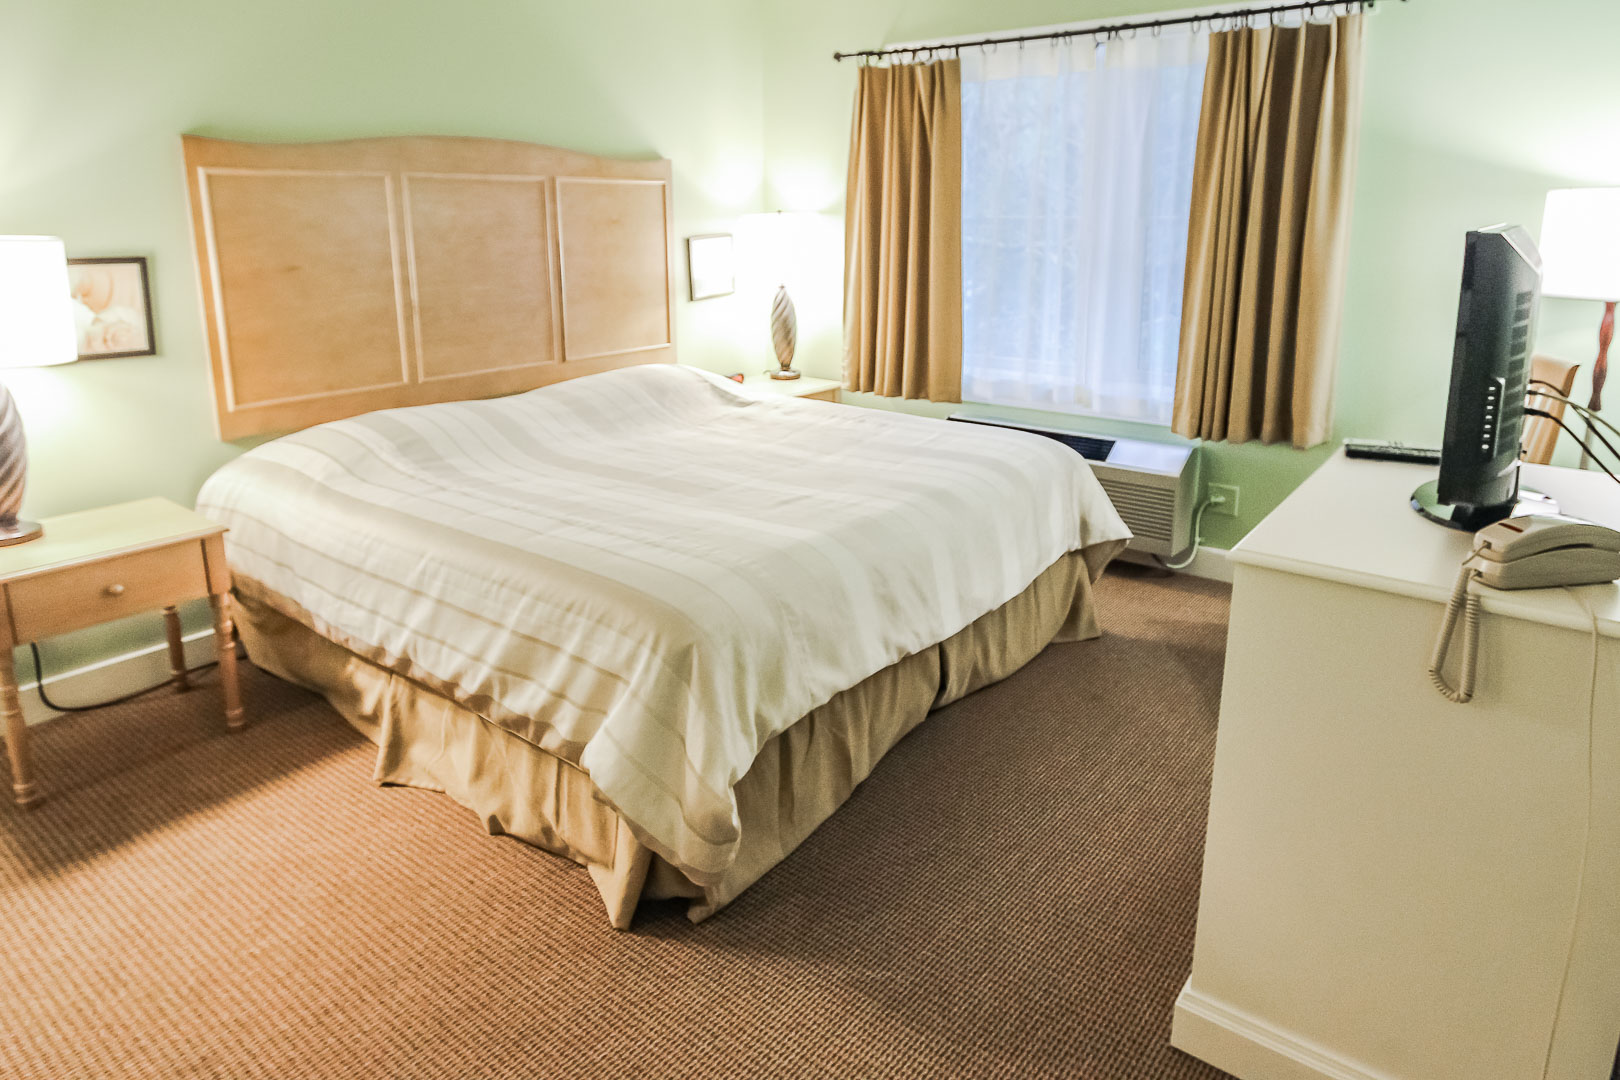 A quaint 1 bedroom unit at VRI's Holly Tree Resort in Massachusetts.